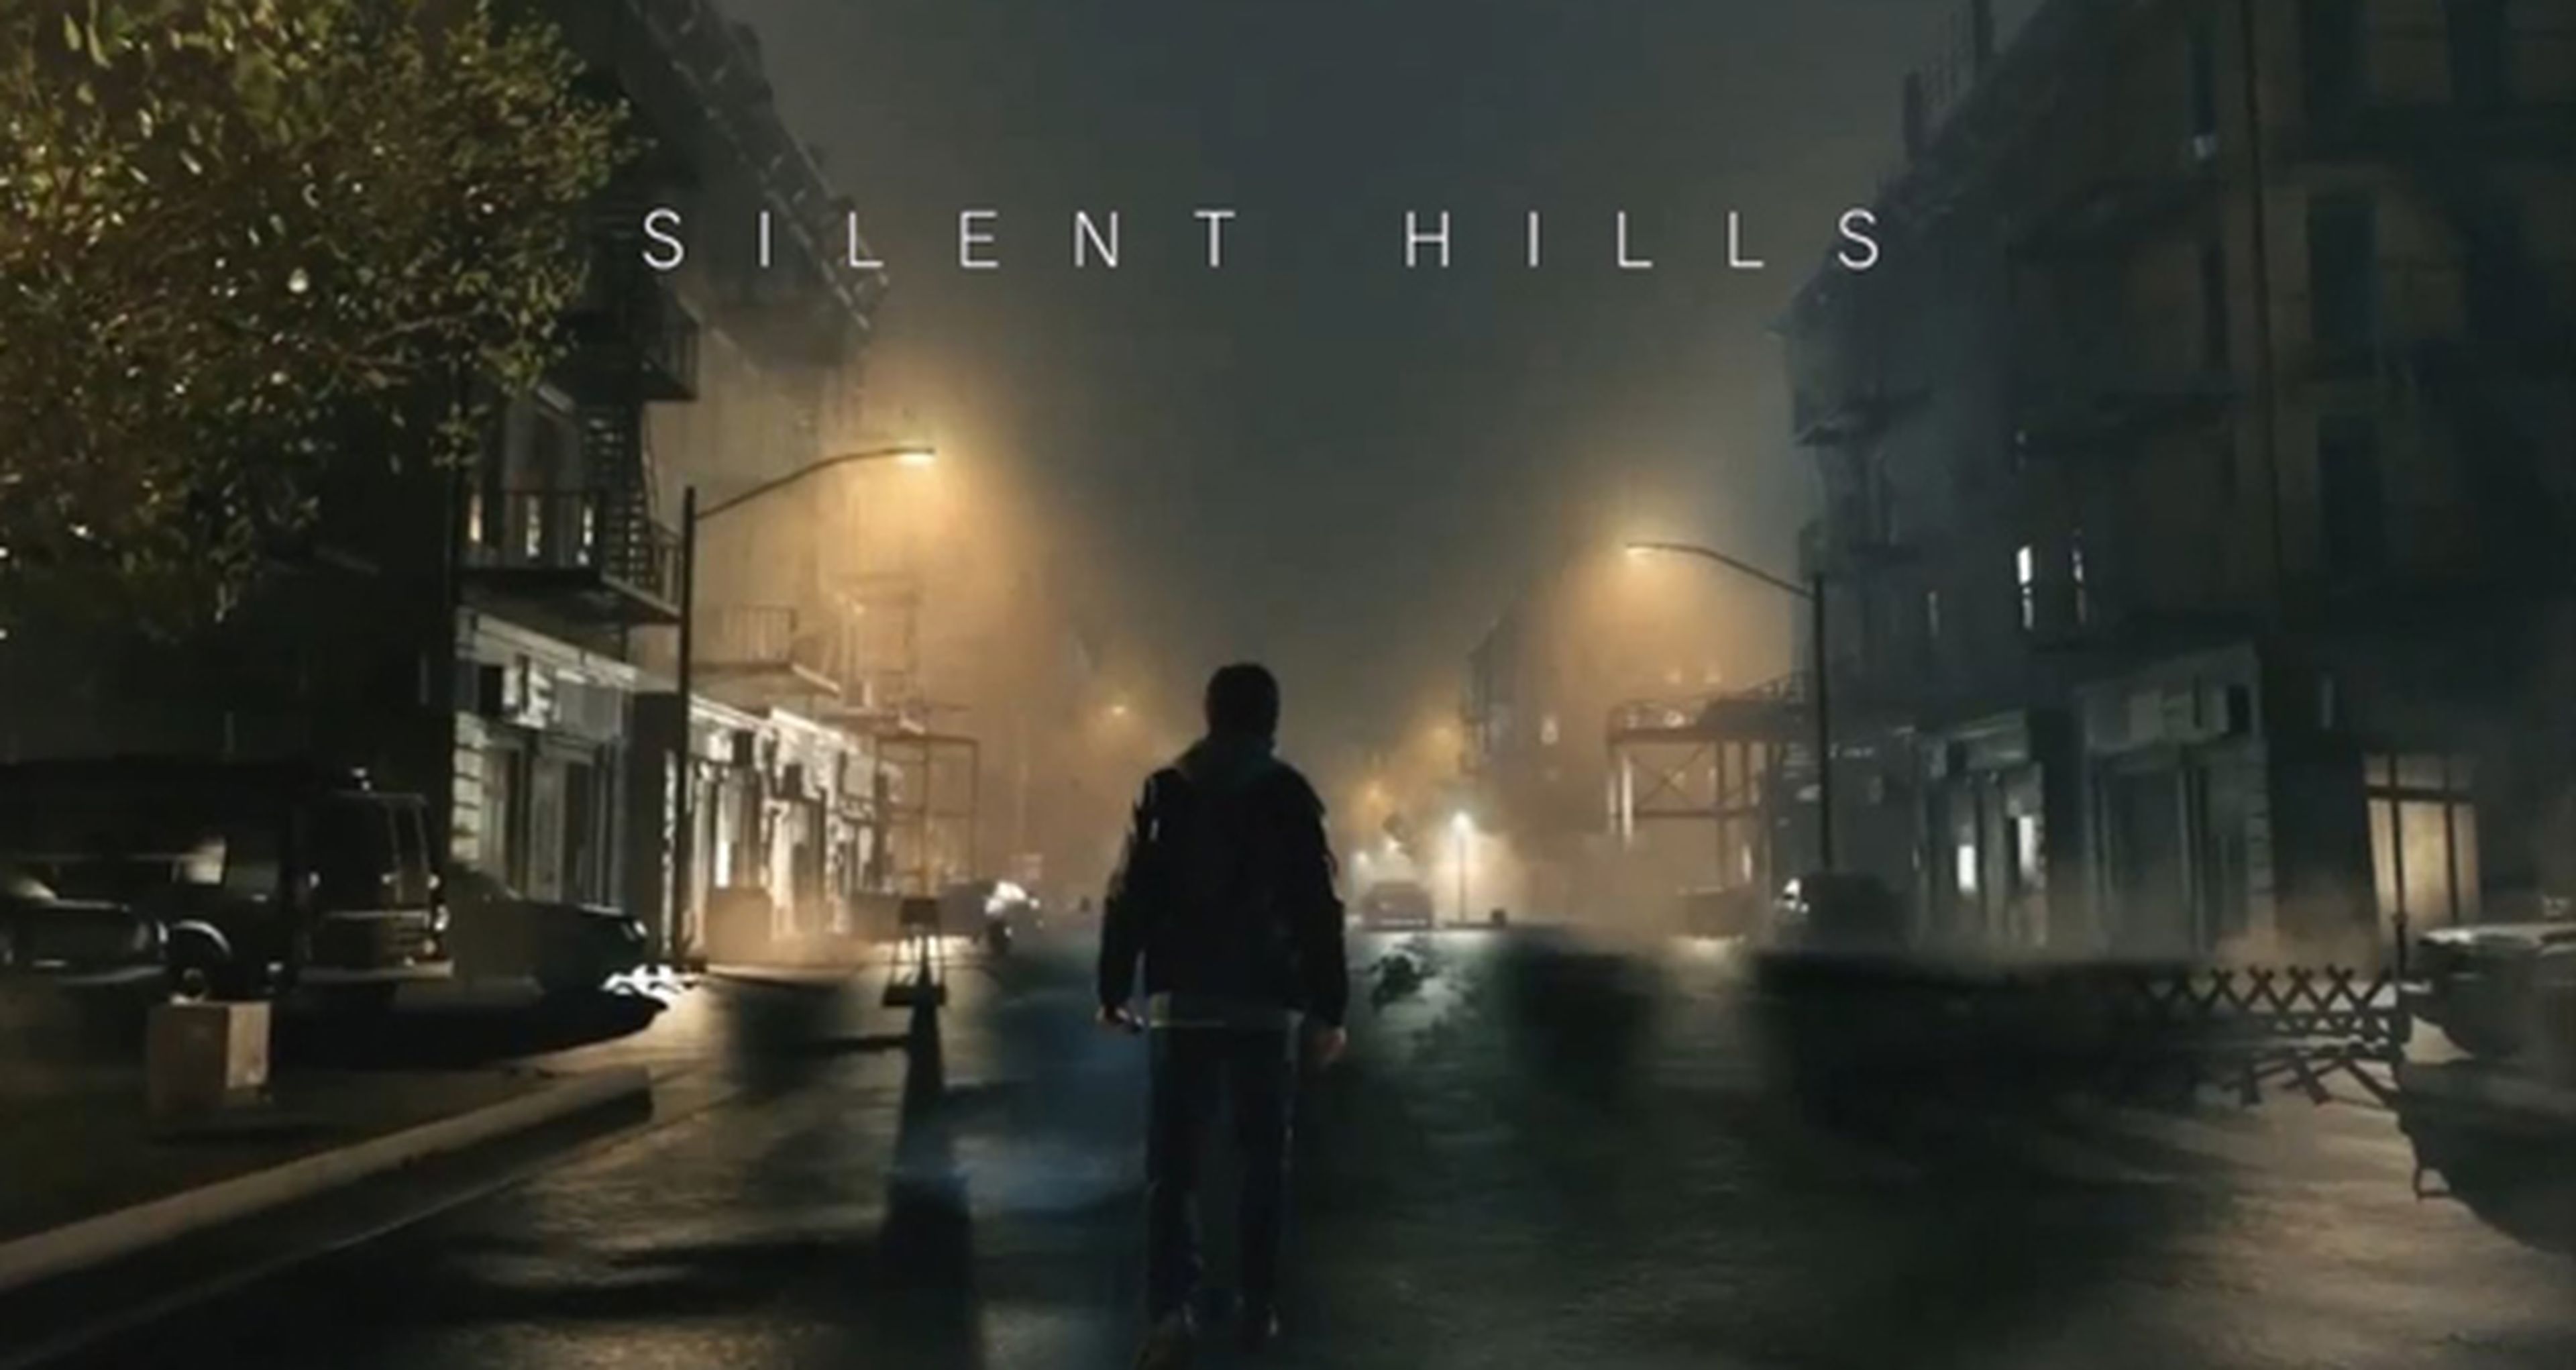 Silent Hills quería causar locura colectiva